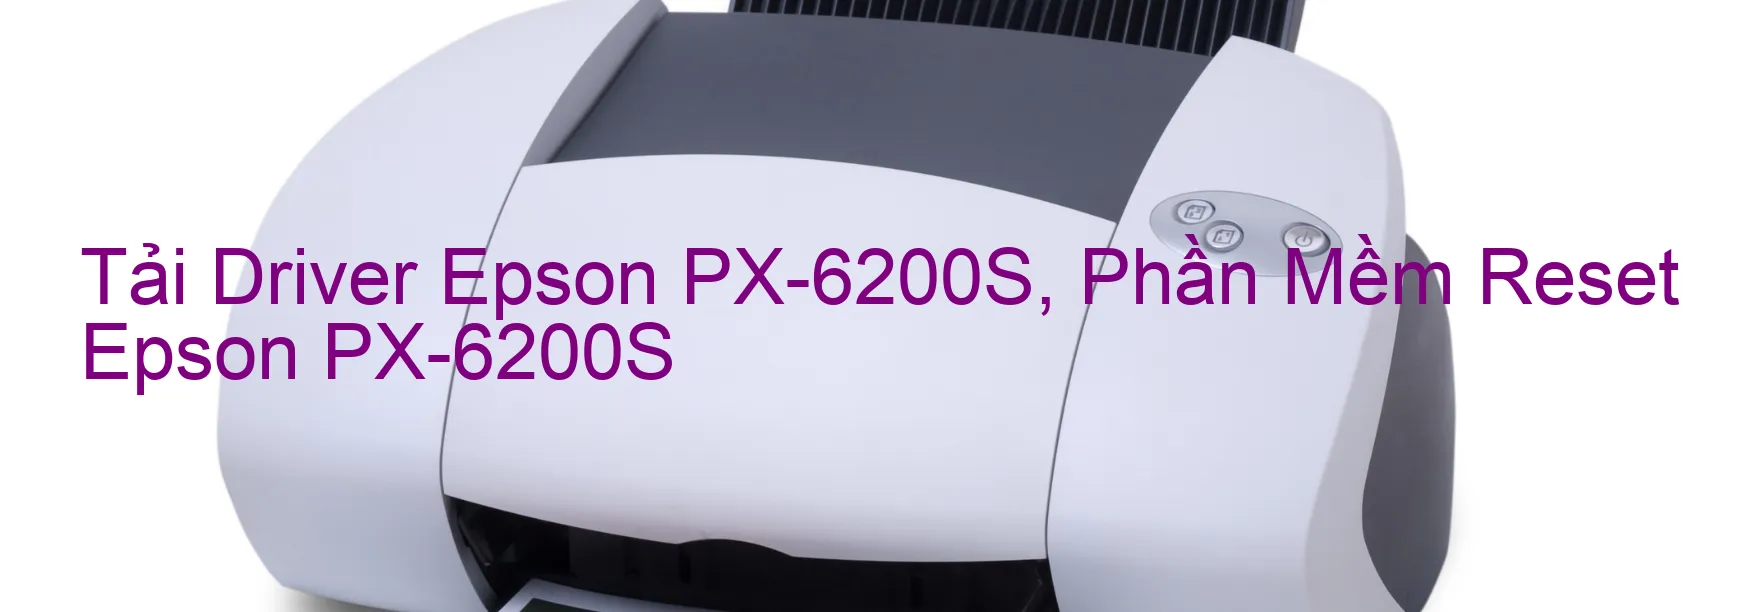 Driver Epson PX-6200S, Phần Mềm Reset Epson PX-6200S